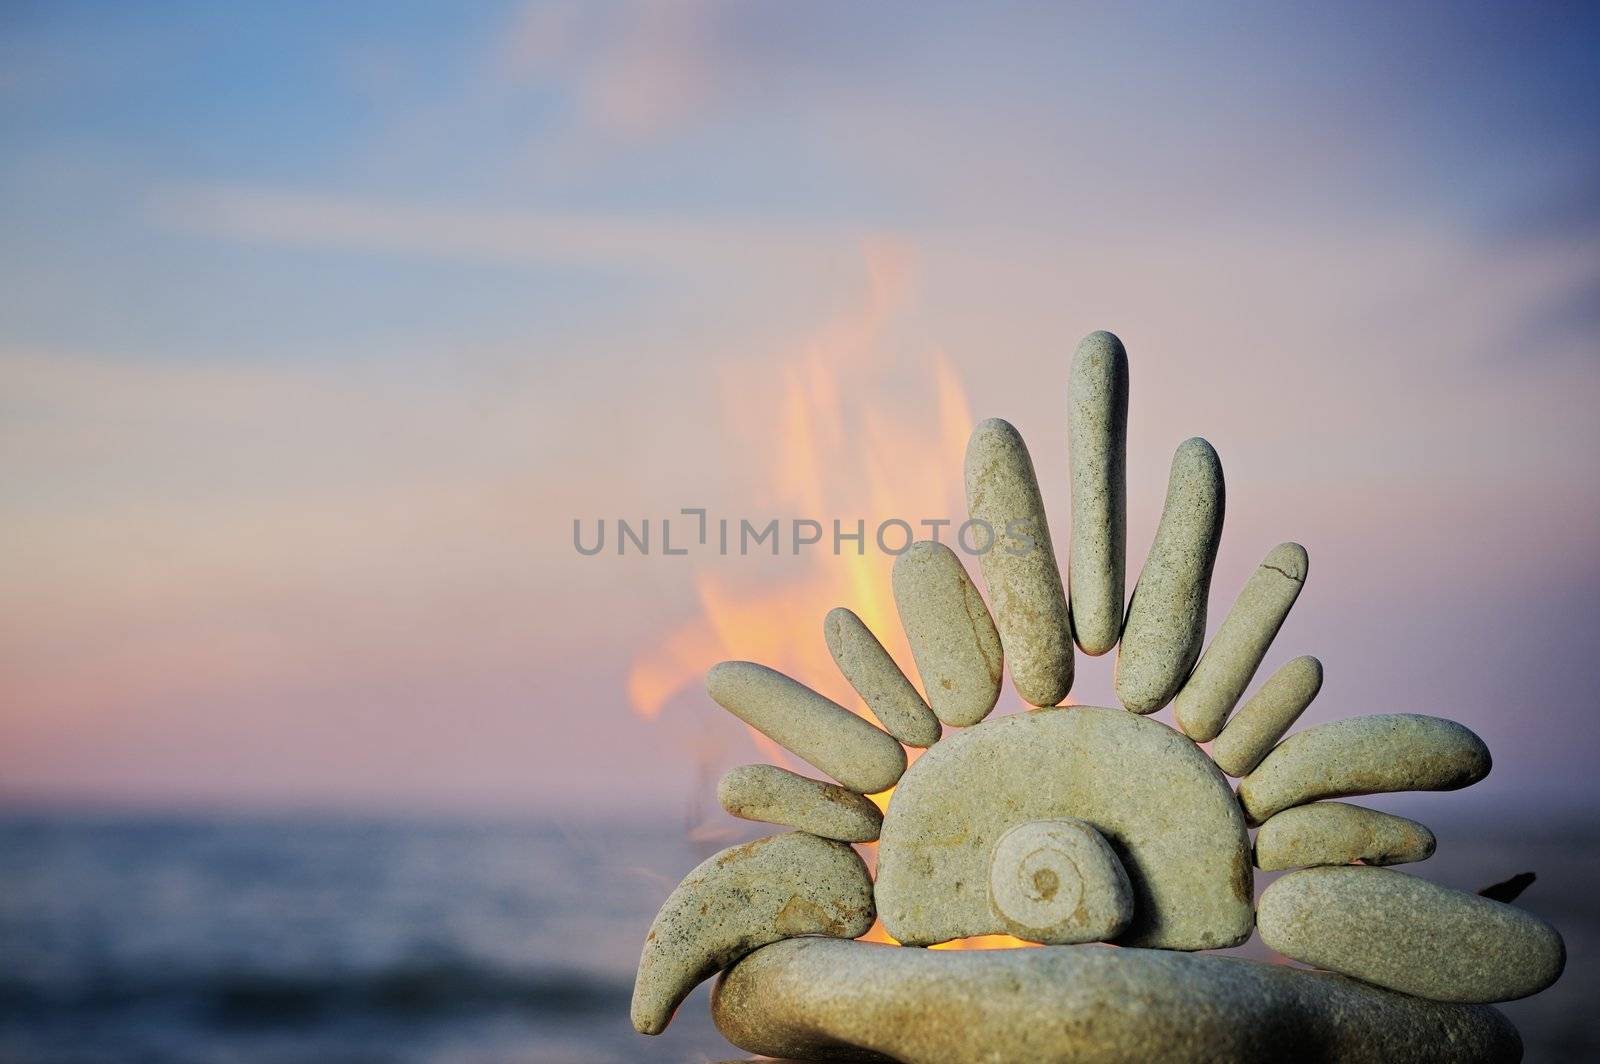 The stone sun burns on a beach in the summer evening